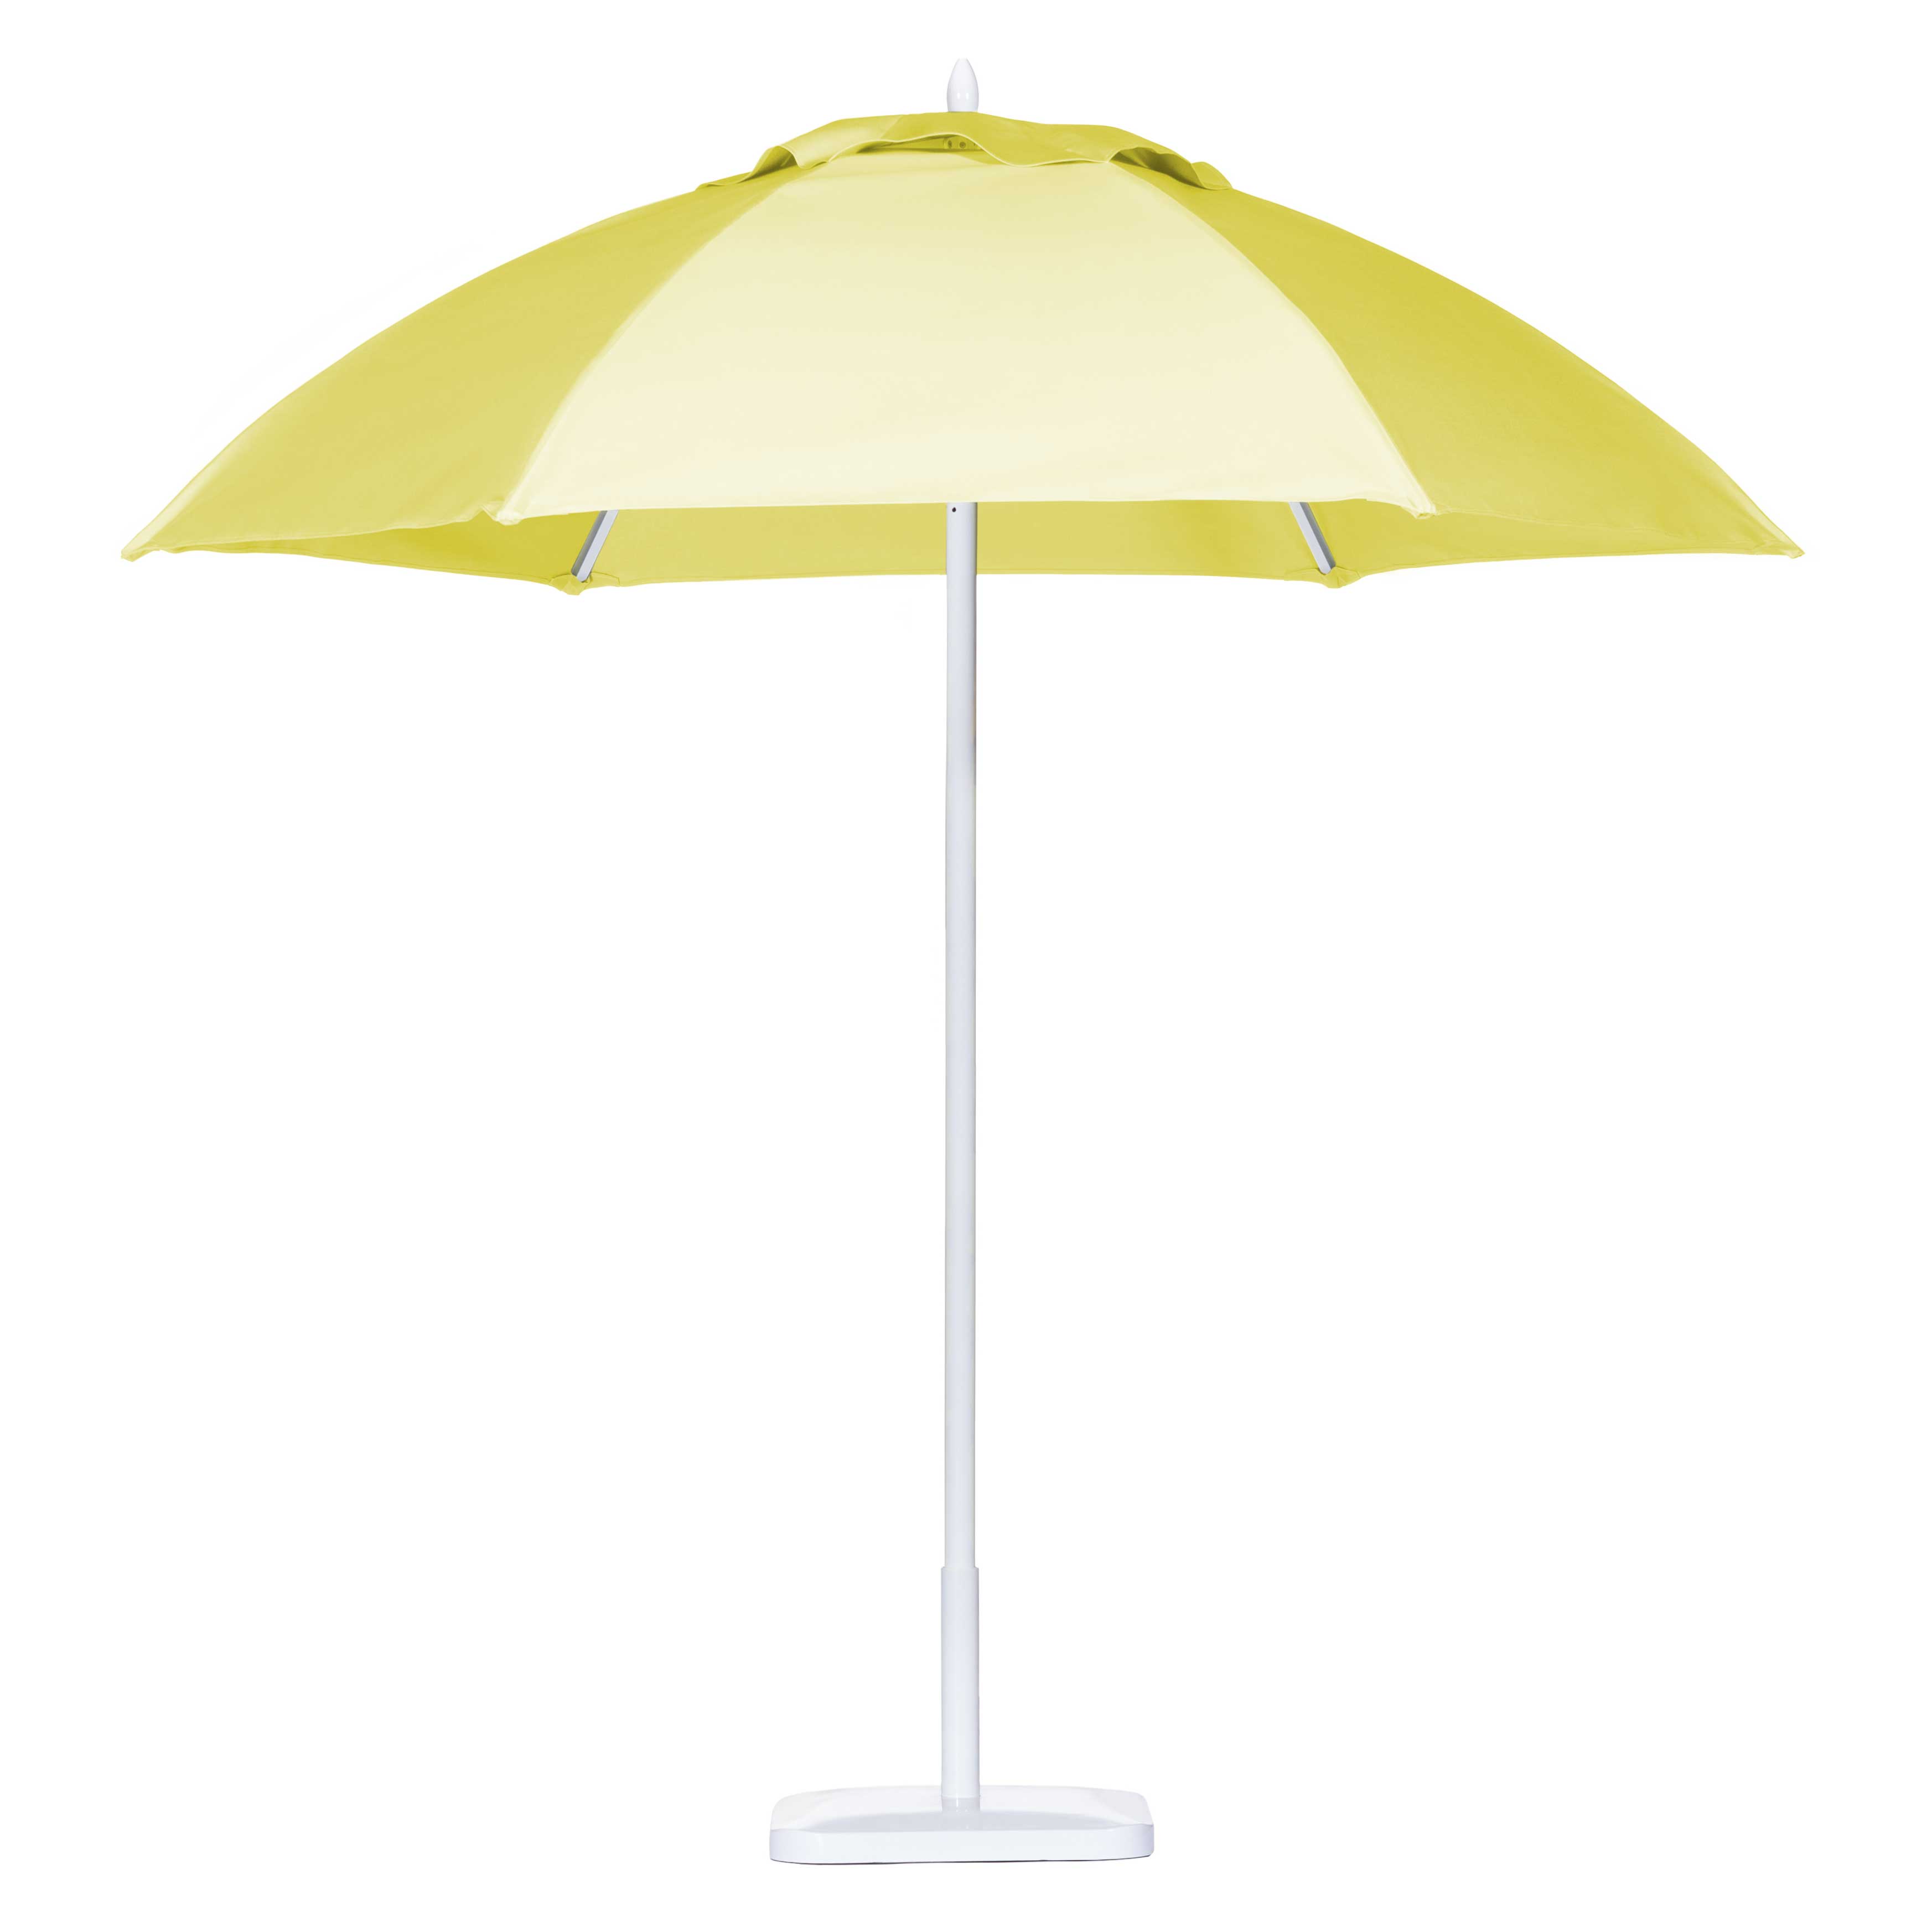 Lemonade Umbrella Image